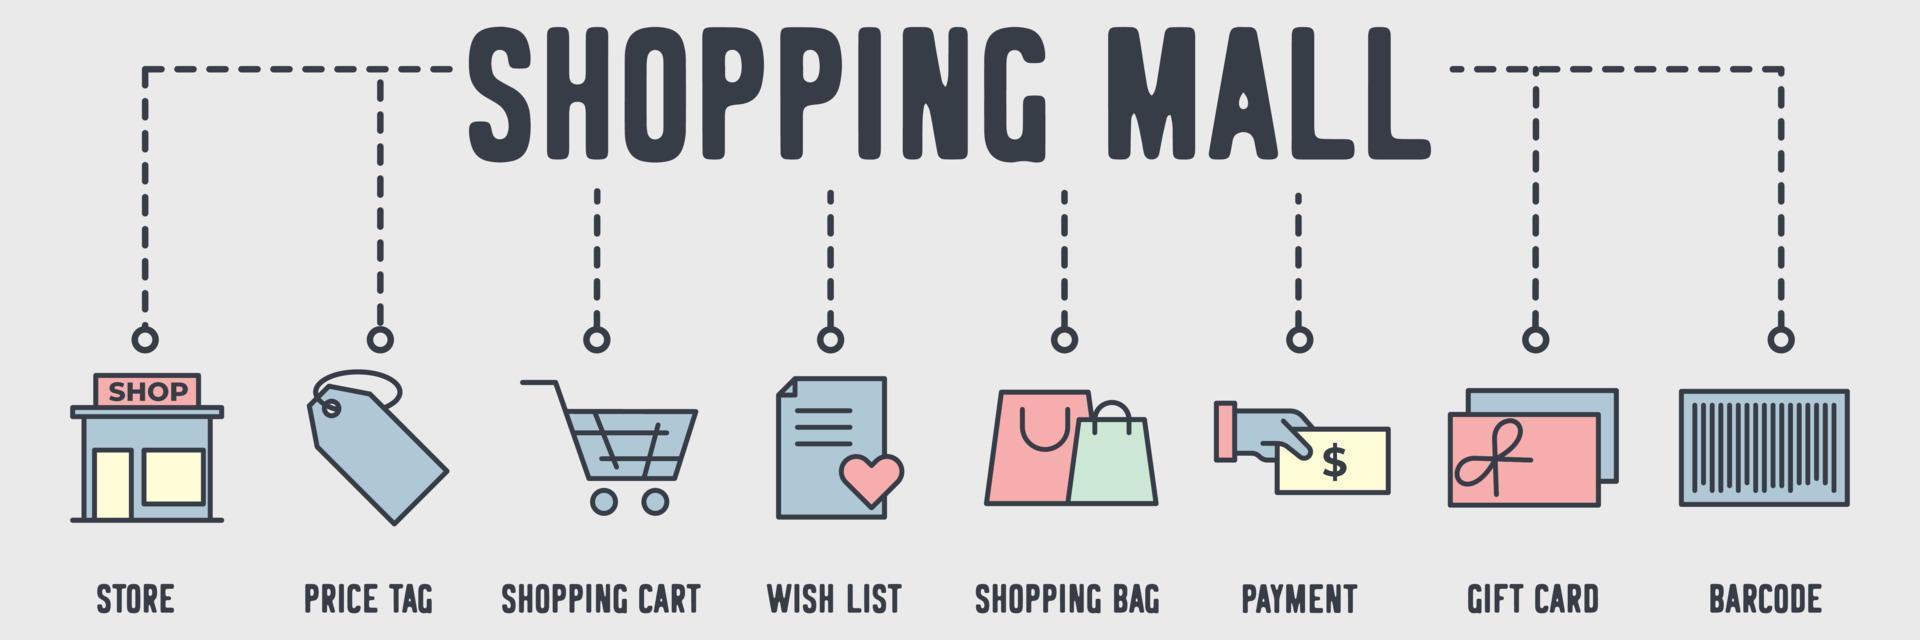 Pin on Wish List Shopping Bag